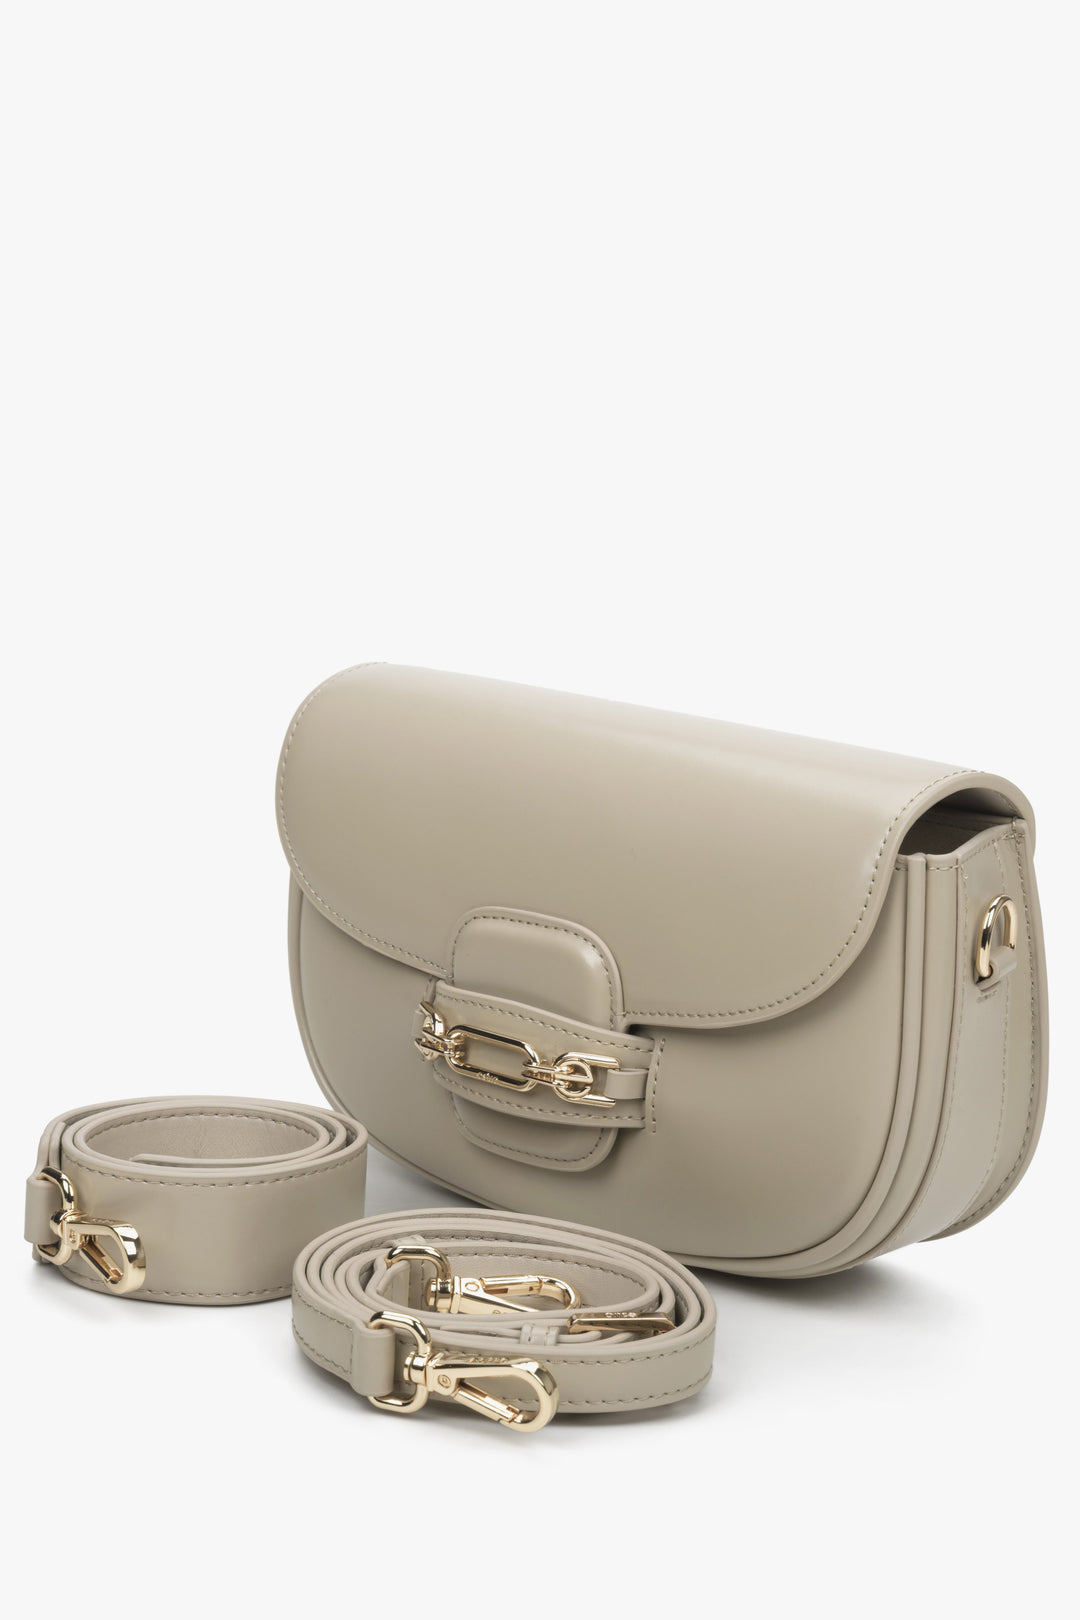 Estro women's beige bag with adjustable strap.